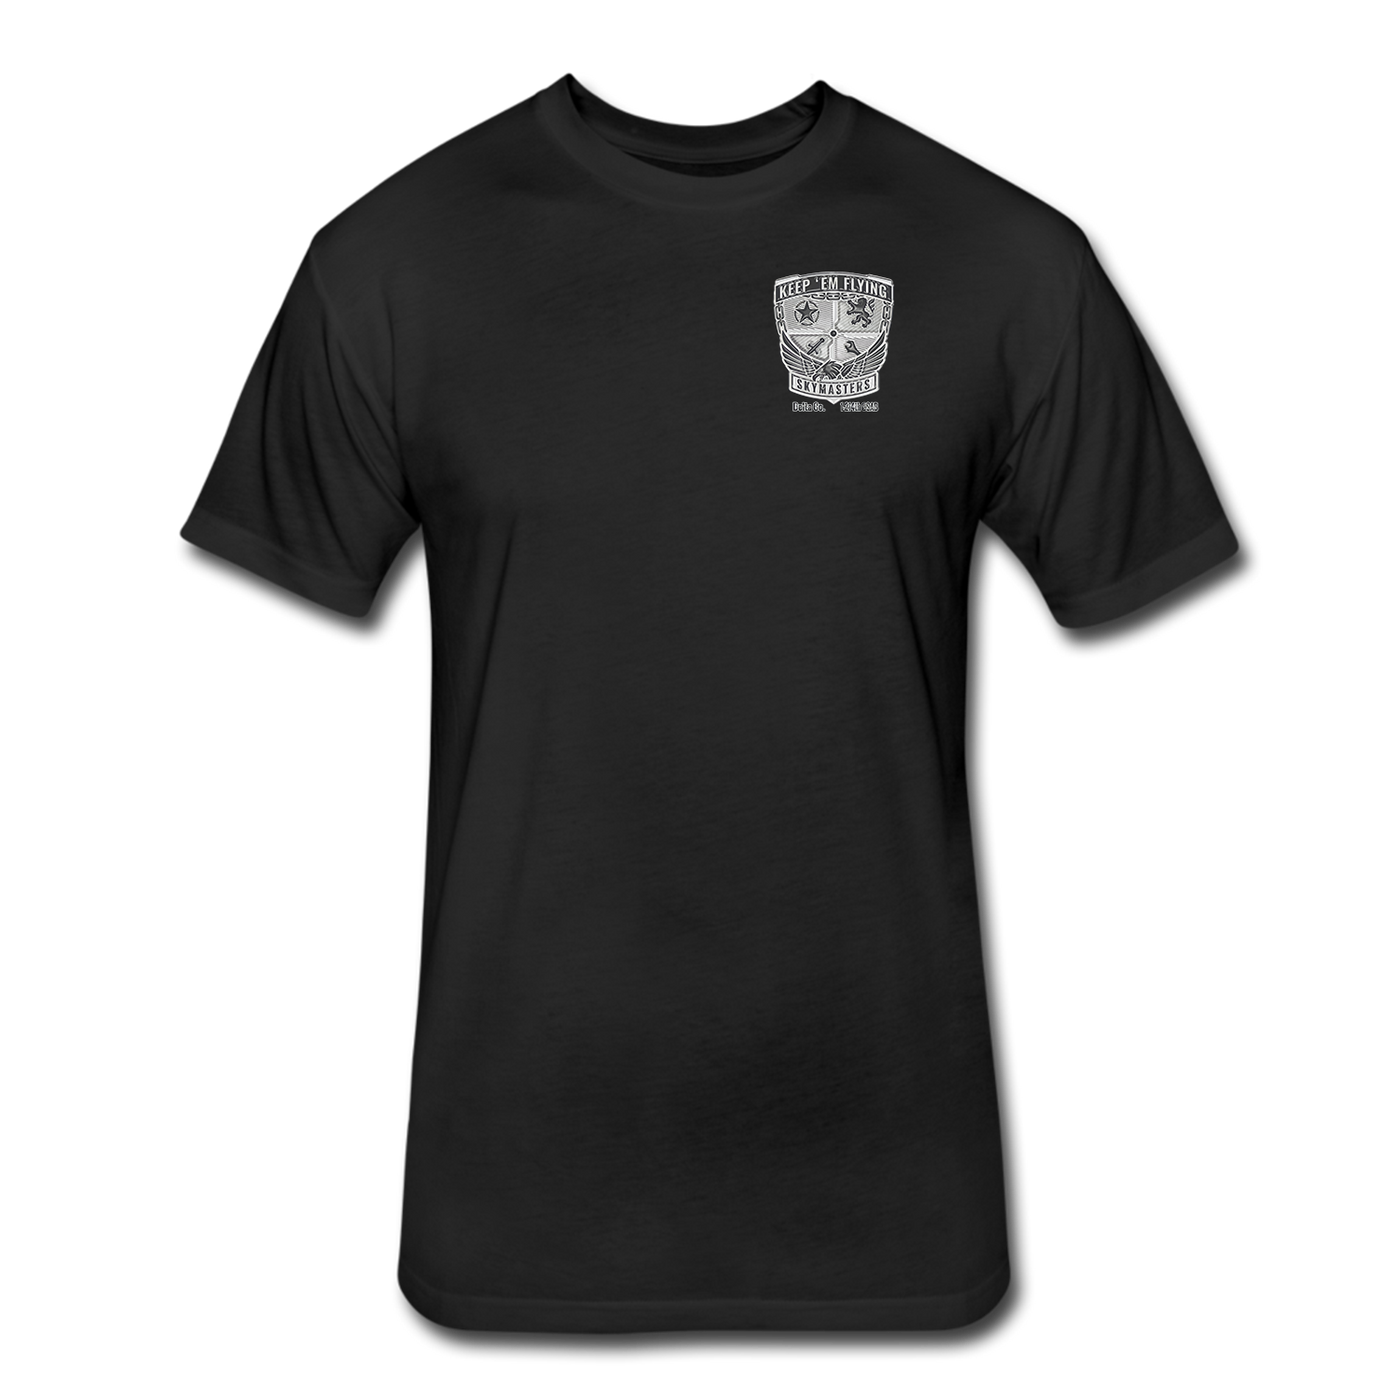 D Co, 1-214 GSAB Skymasters T-Shirt